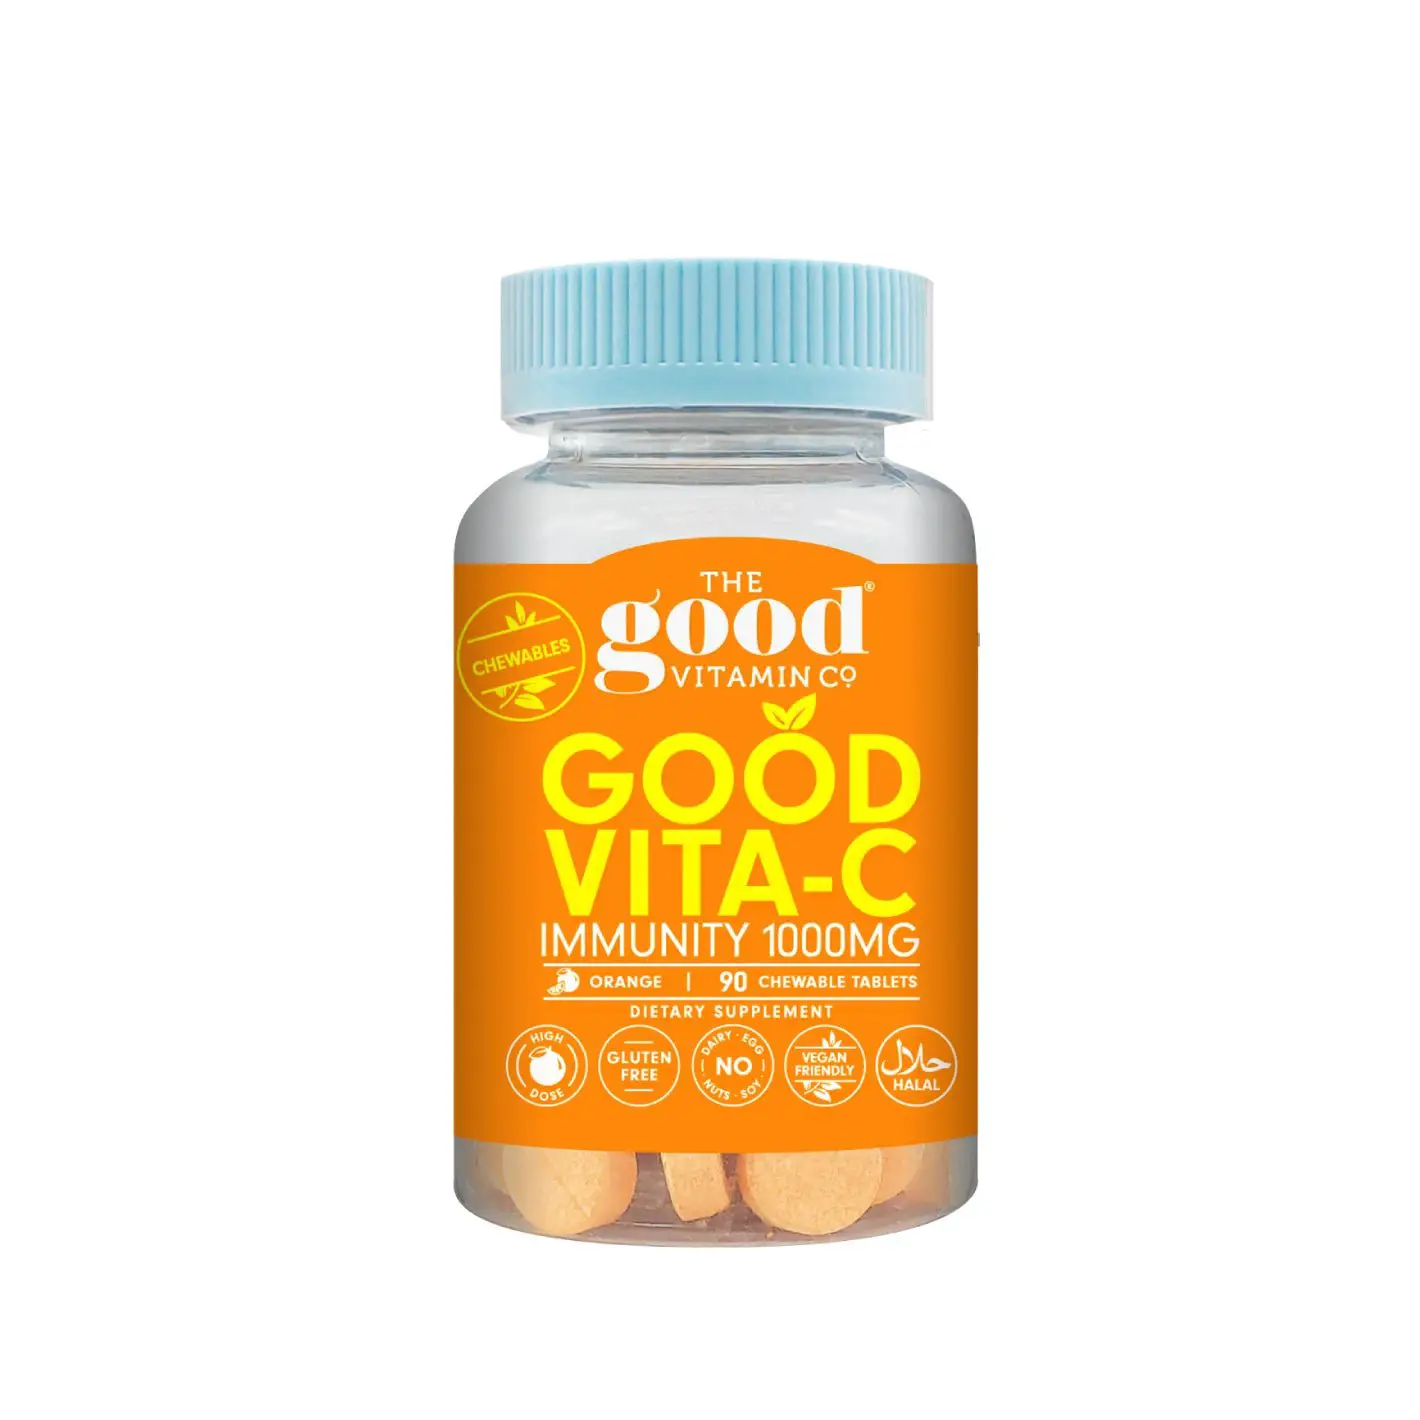 Vitamin C Immunity Supplements â The Good Vitamin Co